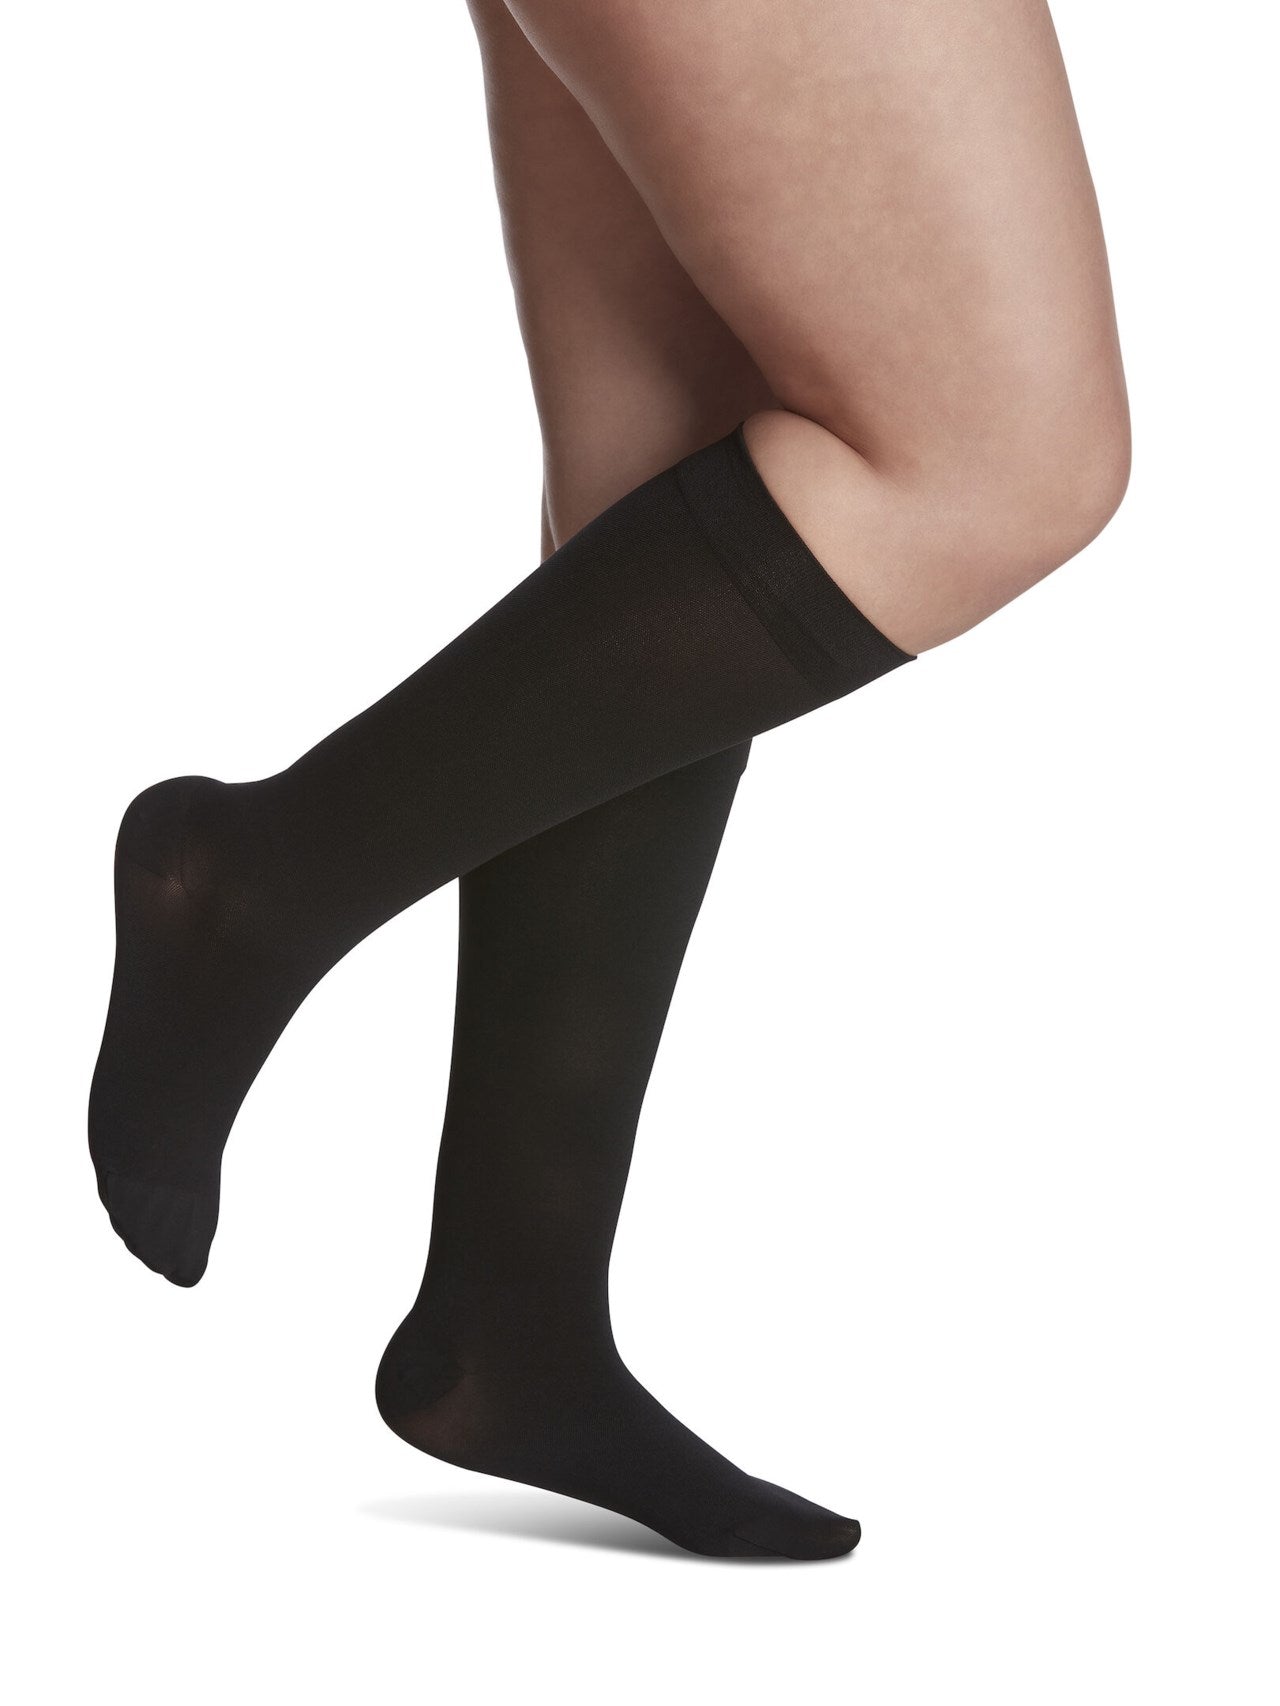 Sigvaris 840 Soft Opaque Compression Socks 15-20 mmHg Calf High for Female Closed Toe